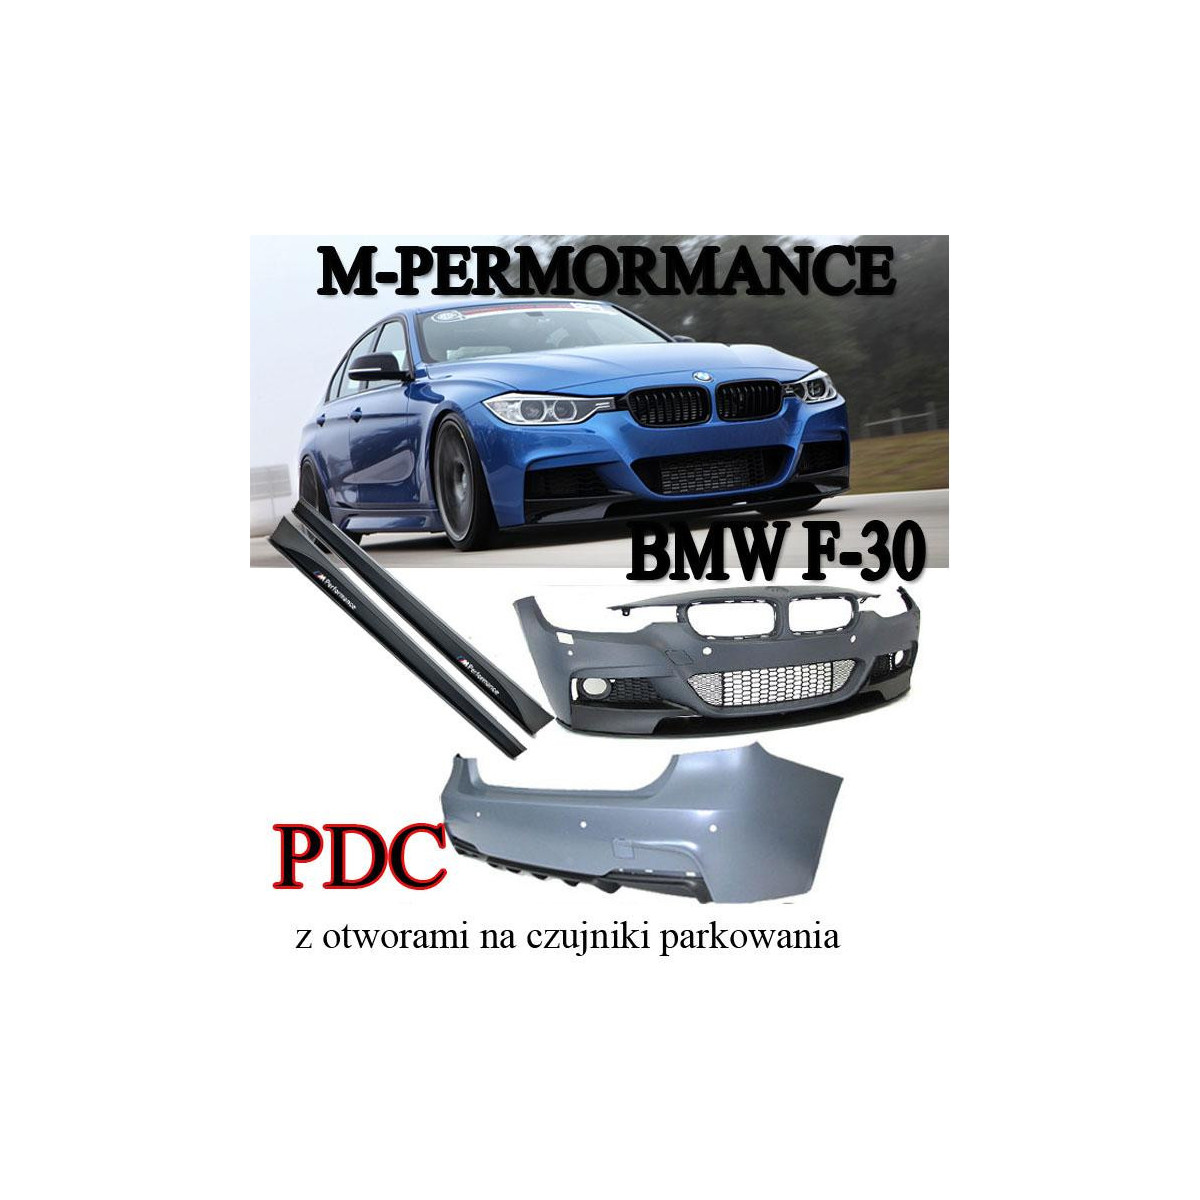 BODY KIT BMW F30 11- M-PERORMANCE PDC